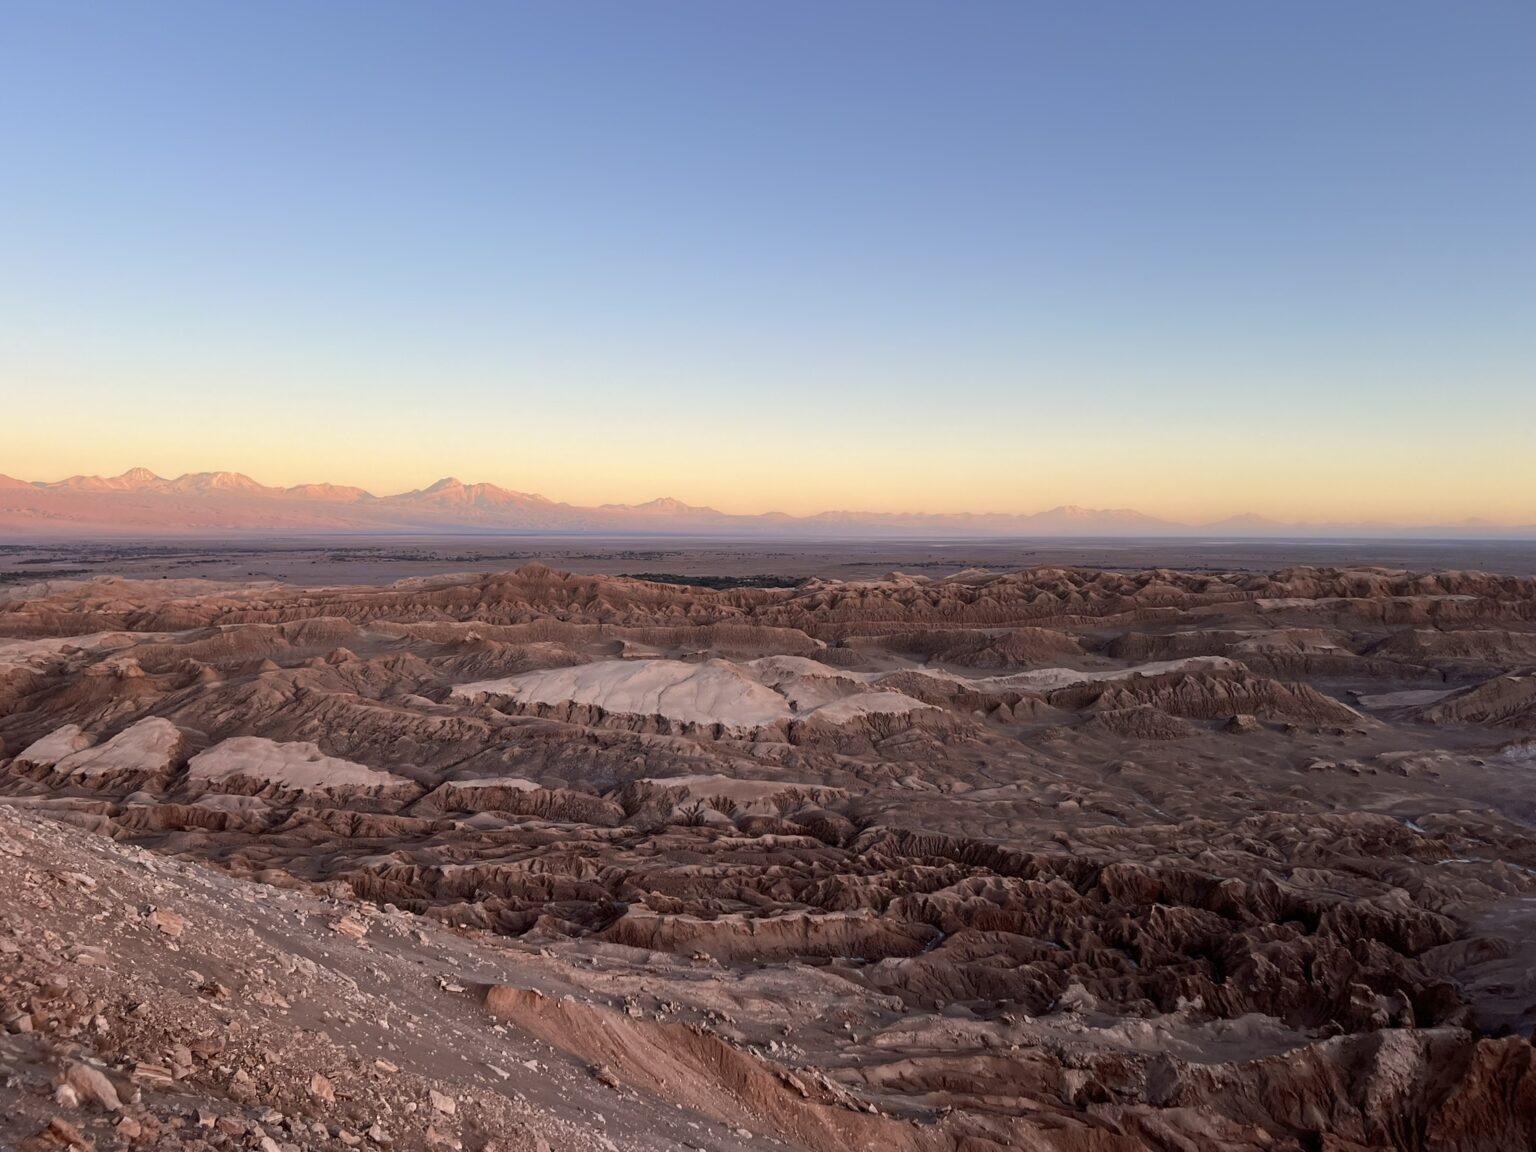 A rocky and sandy landscape in the Atacama desert